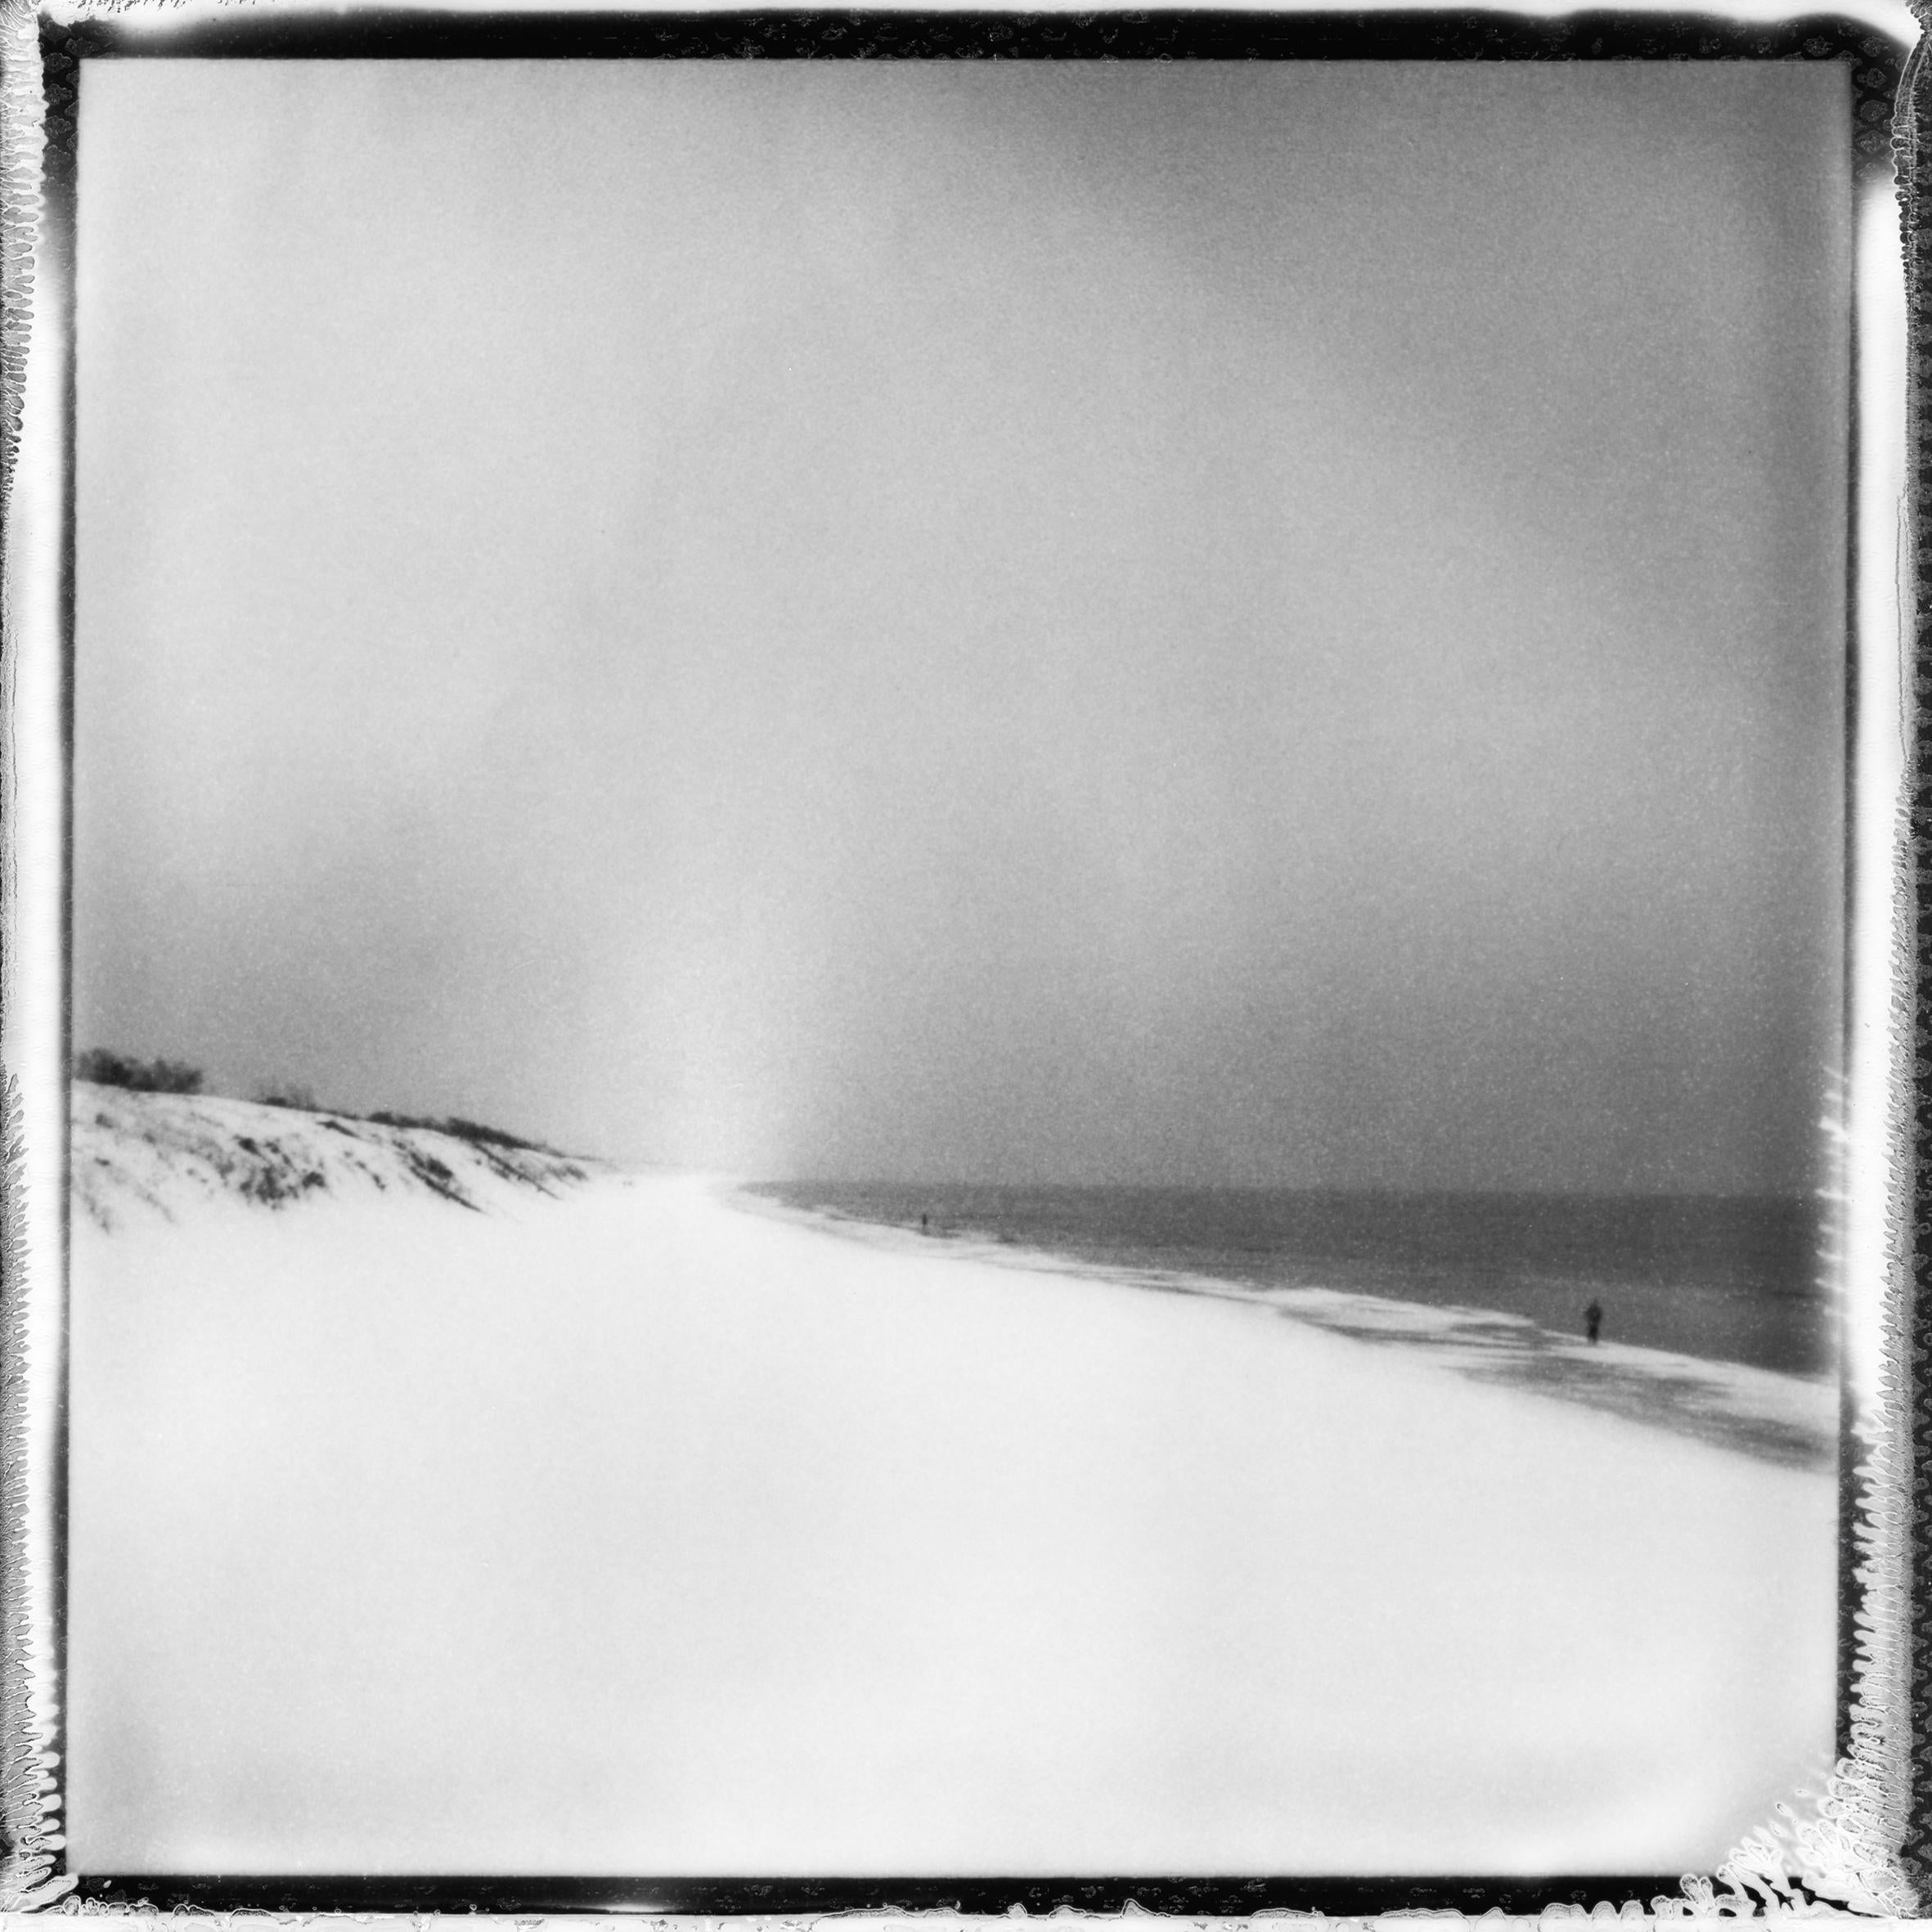 Ugne Pouwell Landscape Photograph - 'Frozen beach' - black and white analogue landscape photography